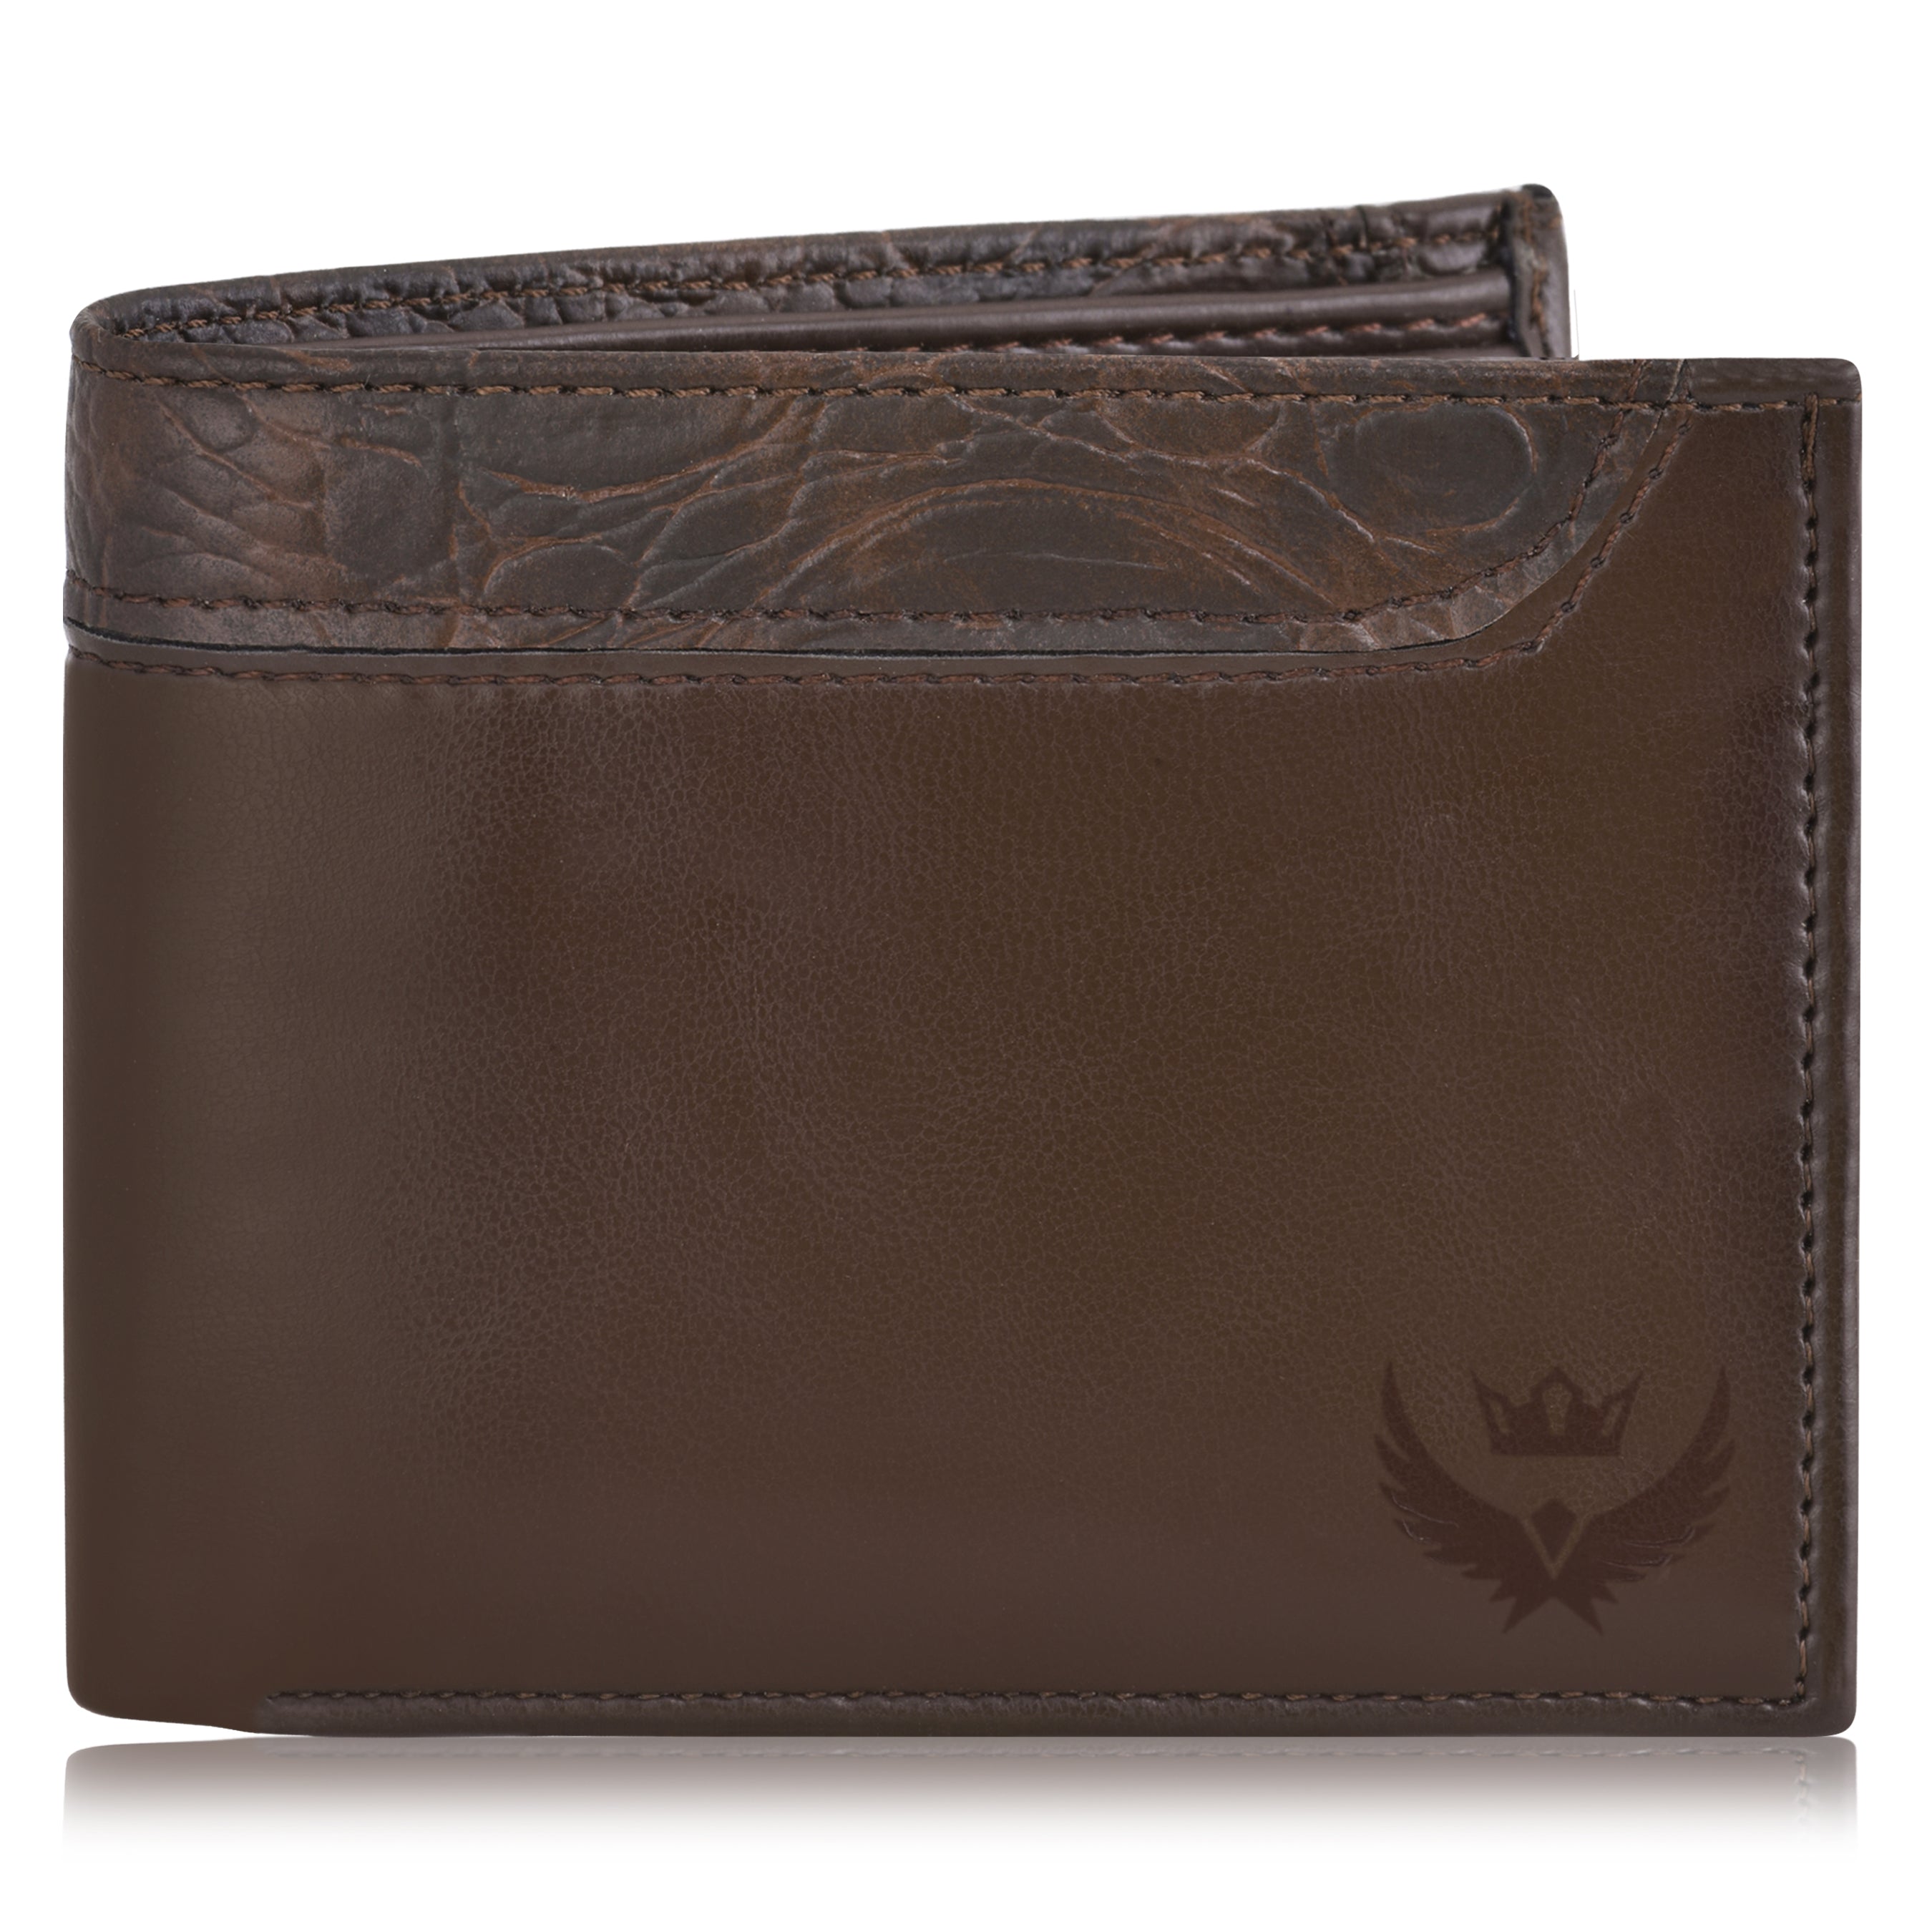 Lorenz Brown wallet